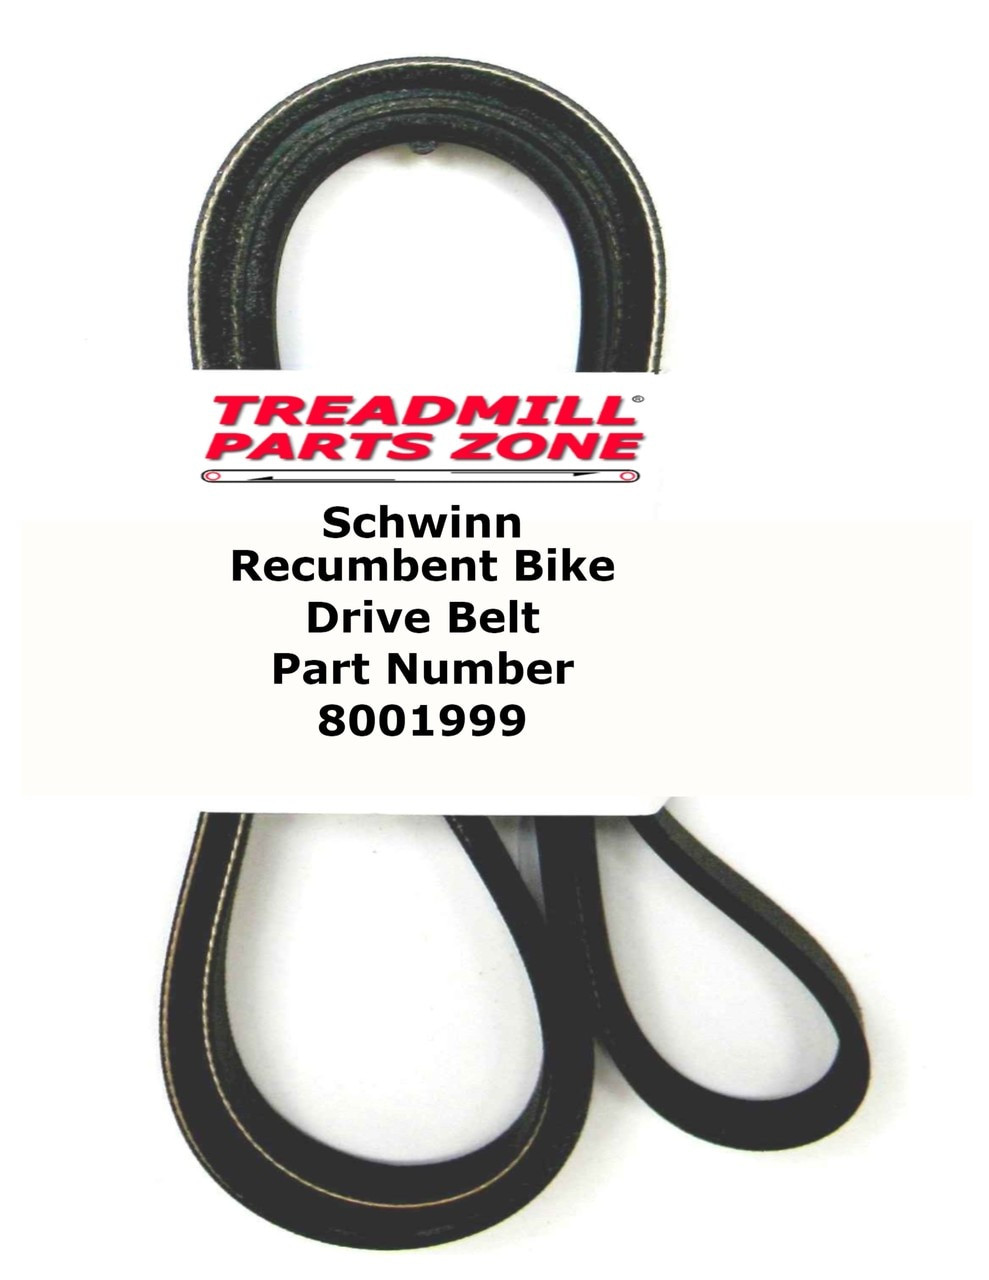 Schwinn Recumbent Bike  Model 270 Drive Belt Part Number 8001999